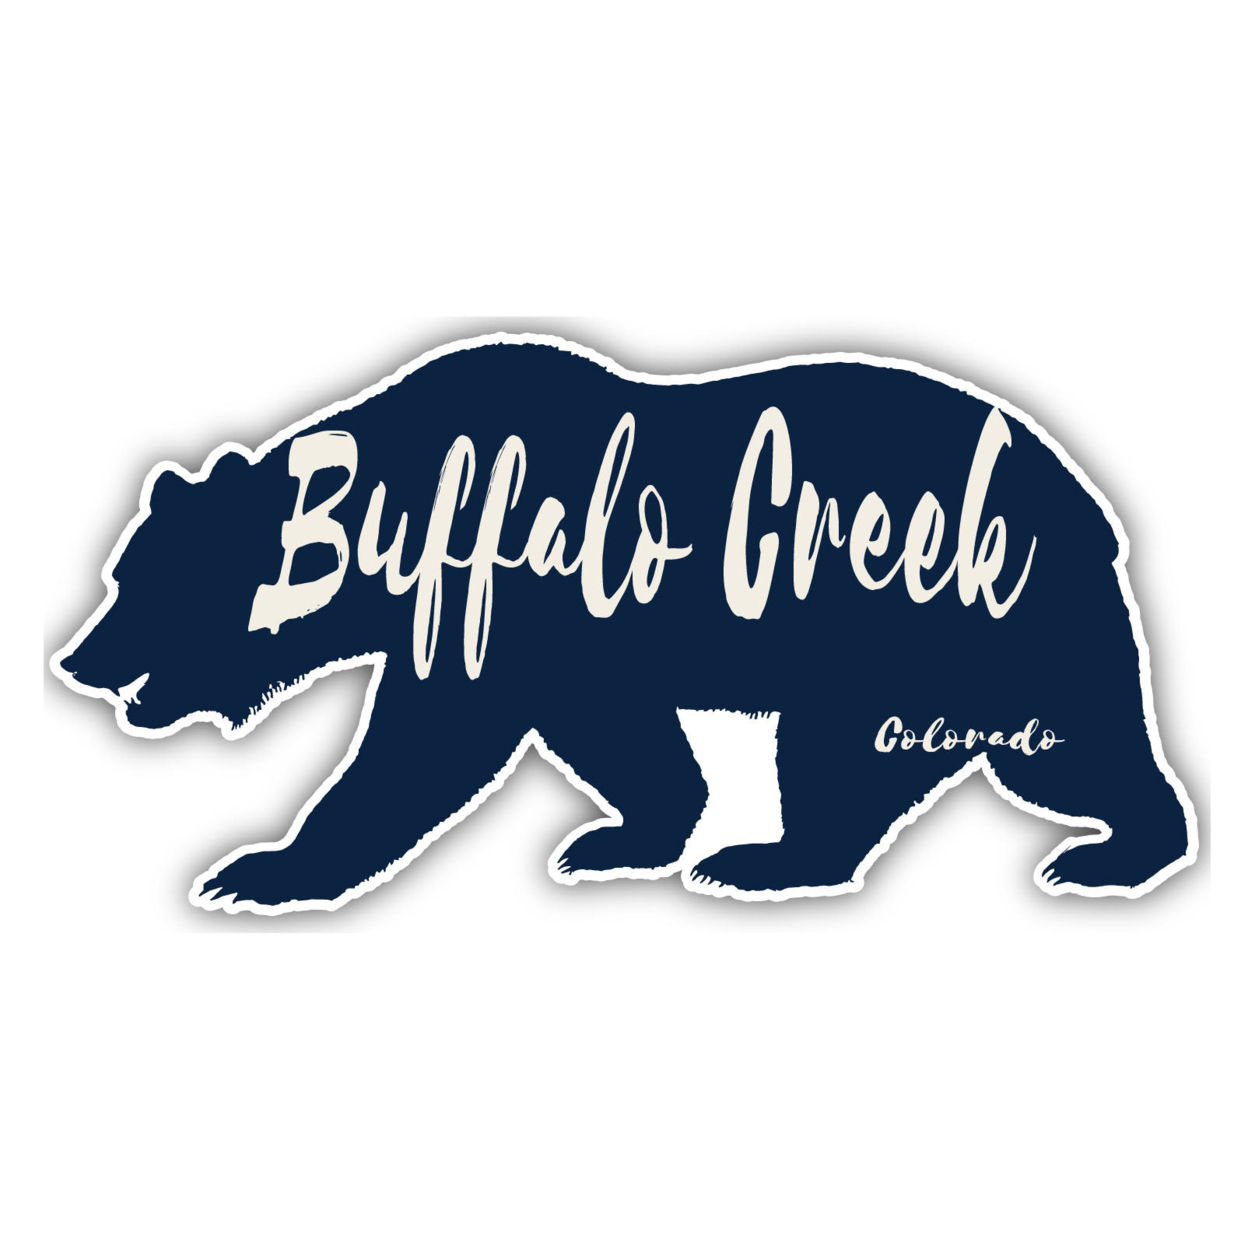 Buffalo Creek Colorado Souvenir Decorative Stickers (Choose Theme And Size) - 4-Pack, 4-Inch, Bear